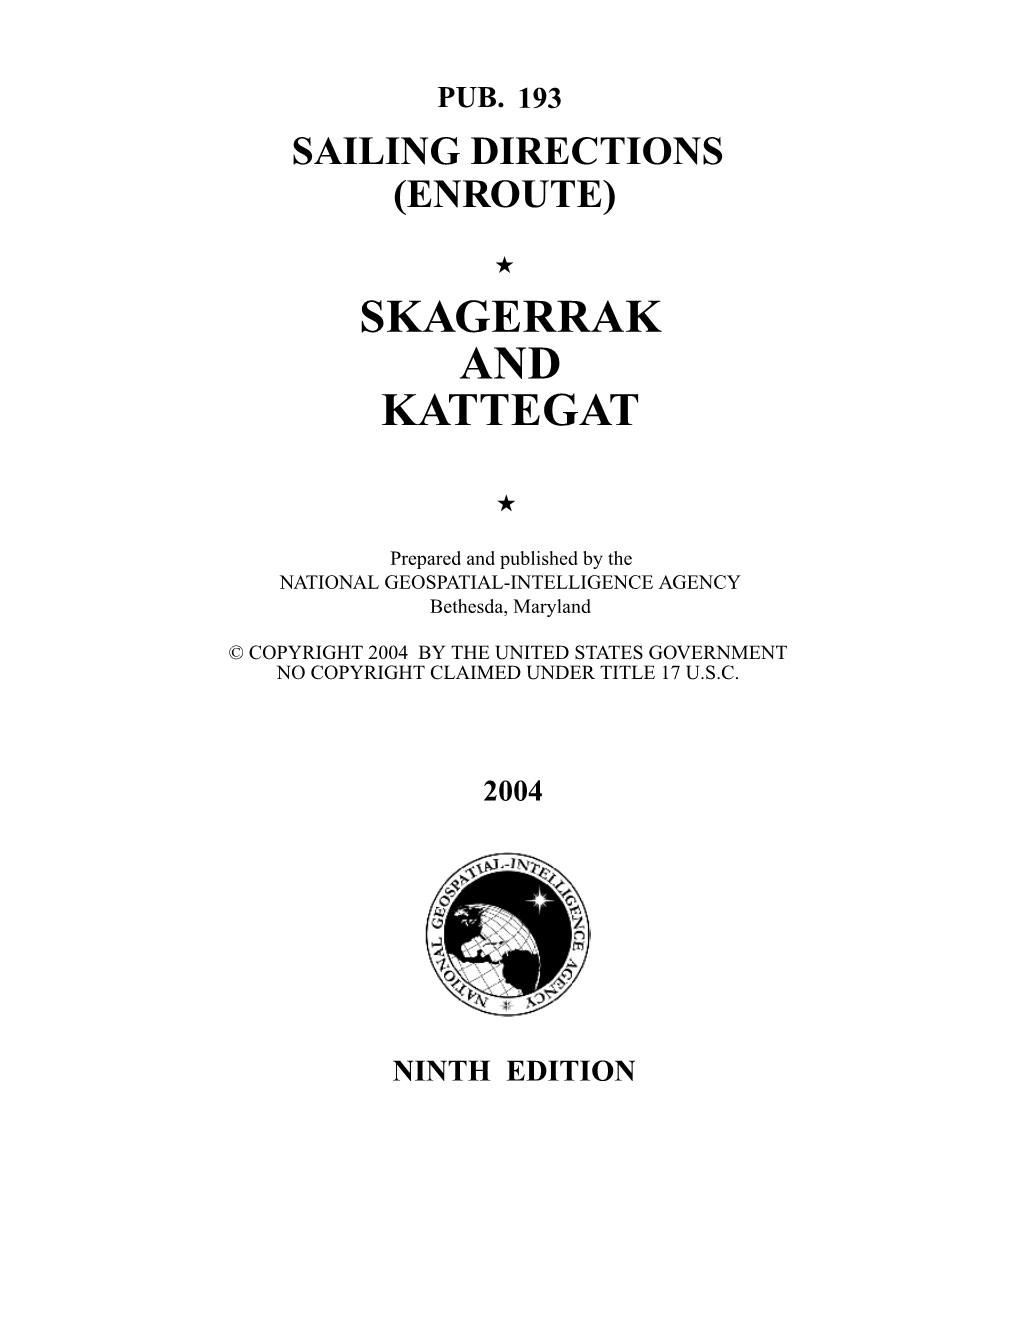 Skagerrak and Kattegat